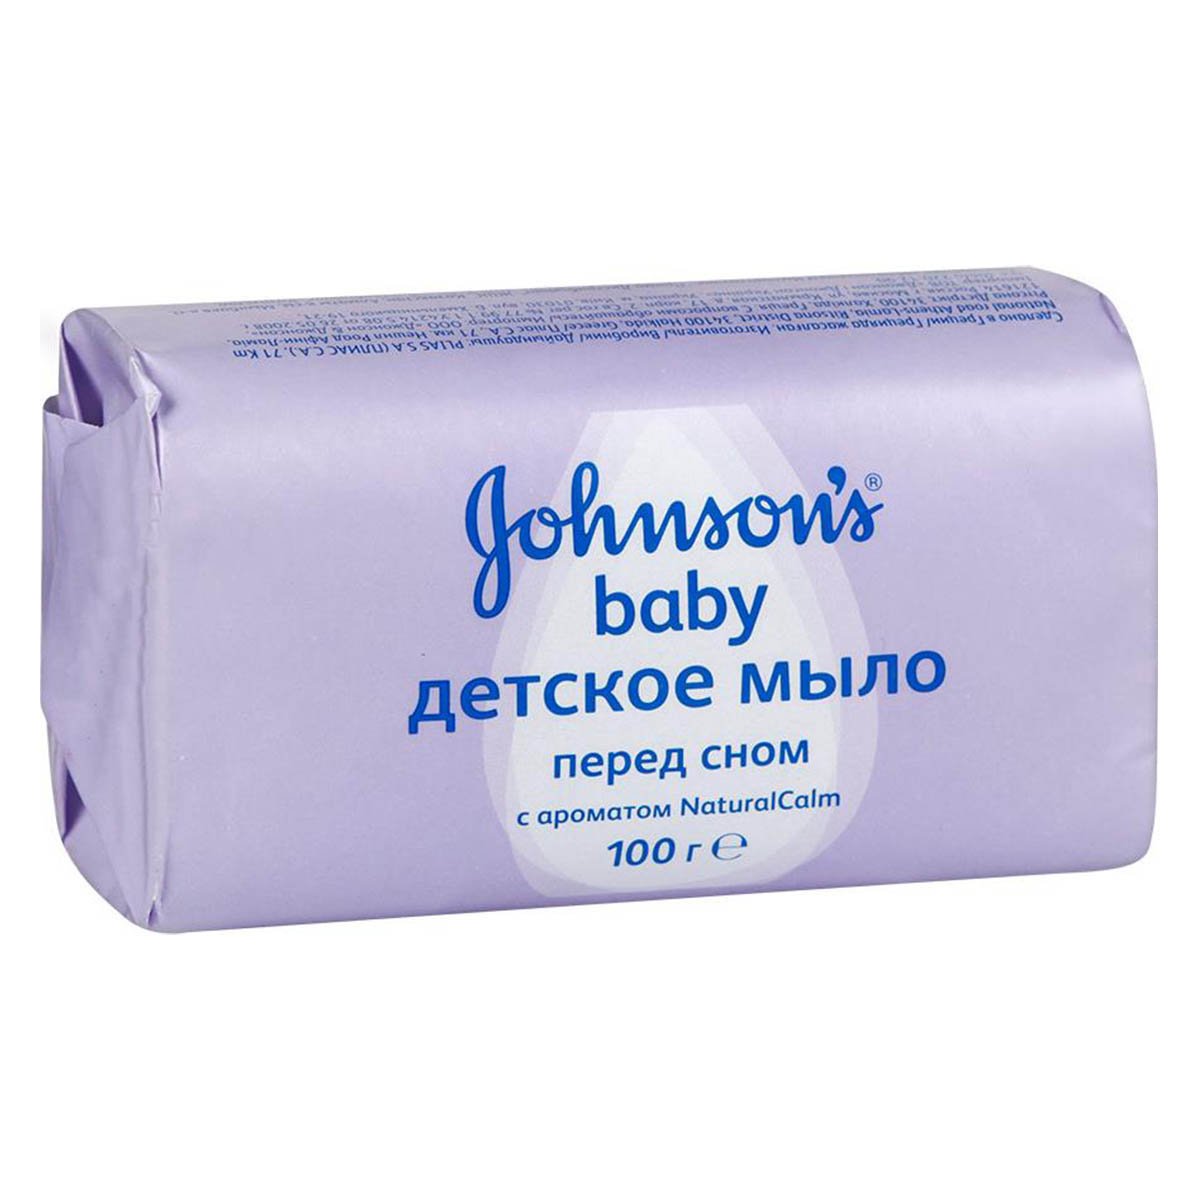 Детское мыло. Мыло джонсонс бэби. Детское мыло джонсонс бэби. Johnson's* Baby мыло "перед сном" 100 г. Johnson's Baby мыло "перед сном", с лавандой, детское, 100 г.